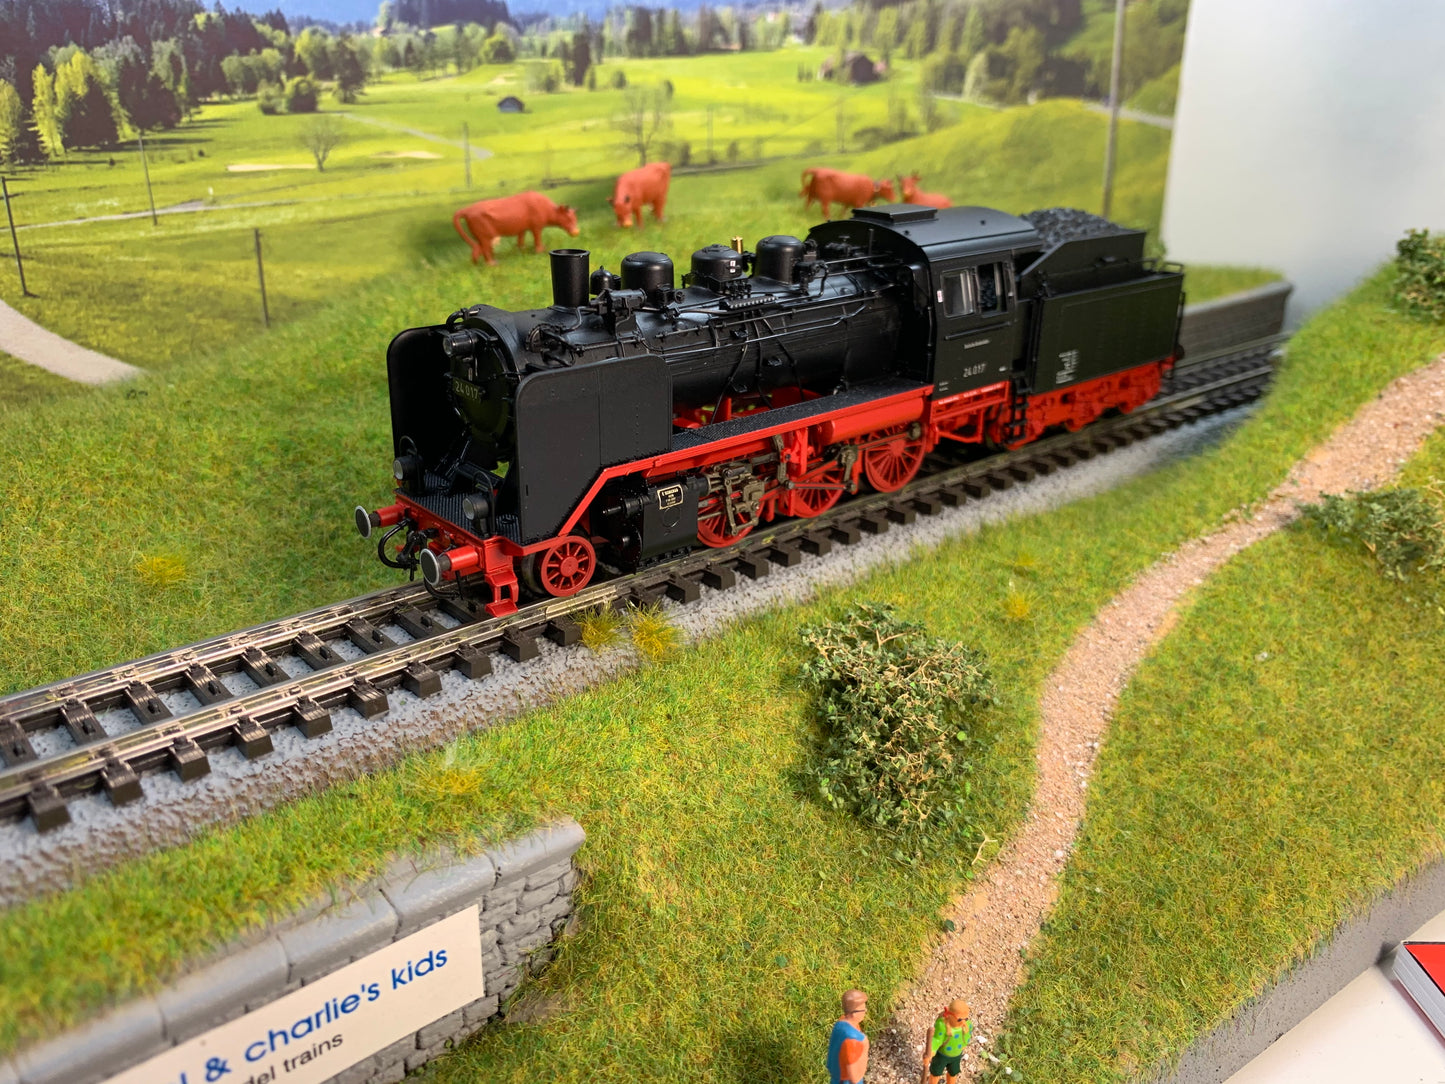 Roco 68216 - Steam locomotive 24 017